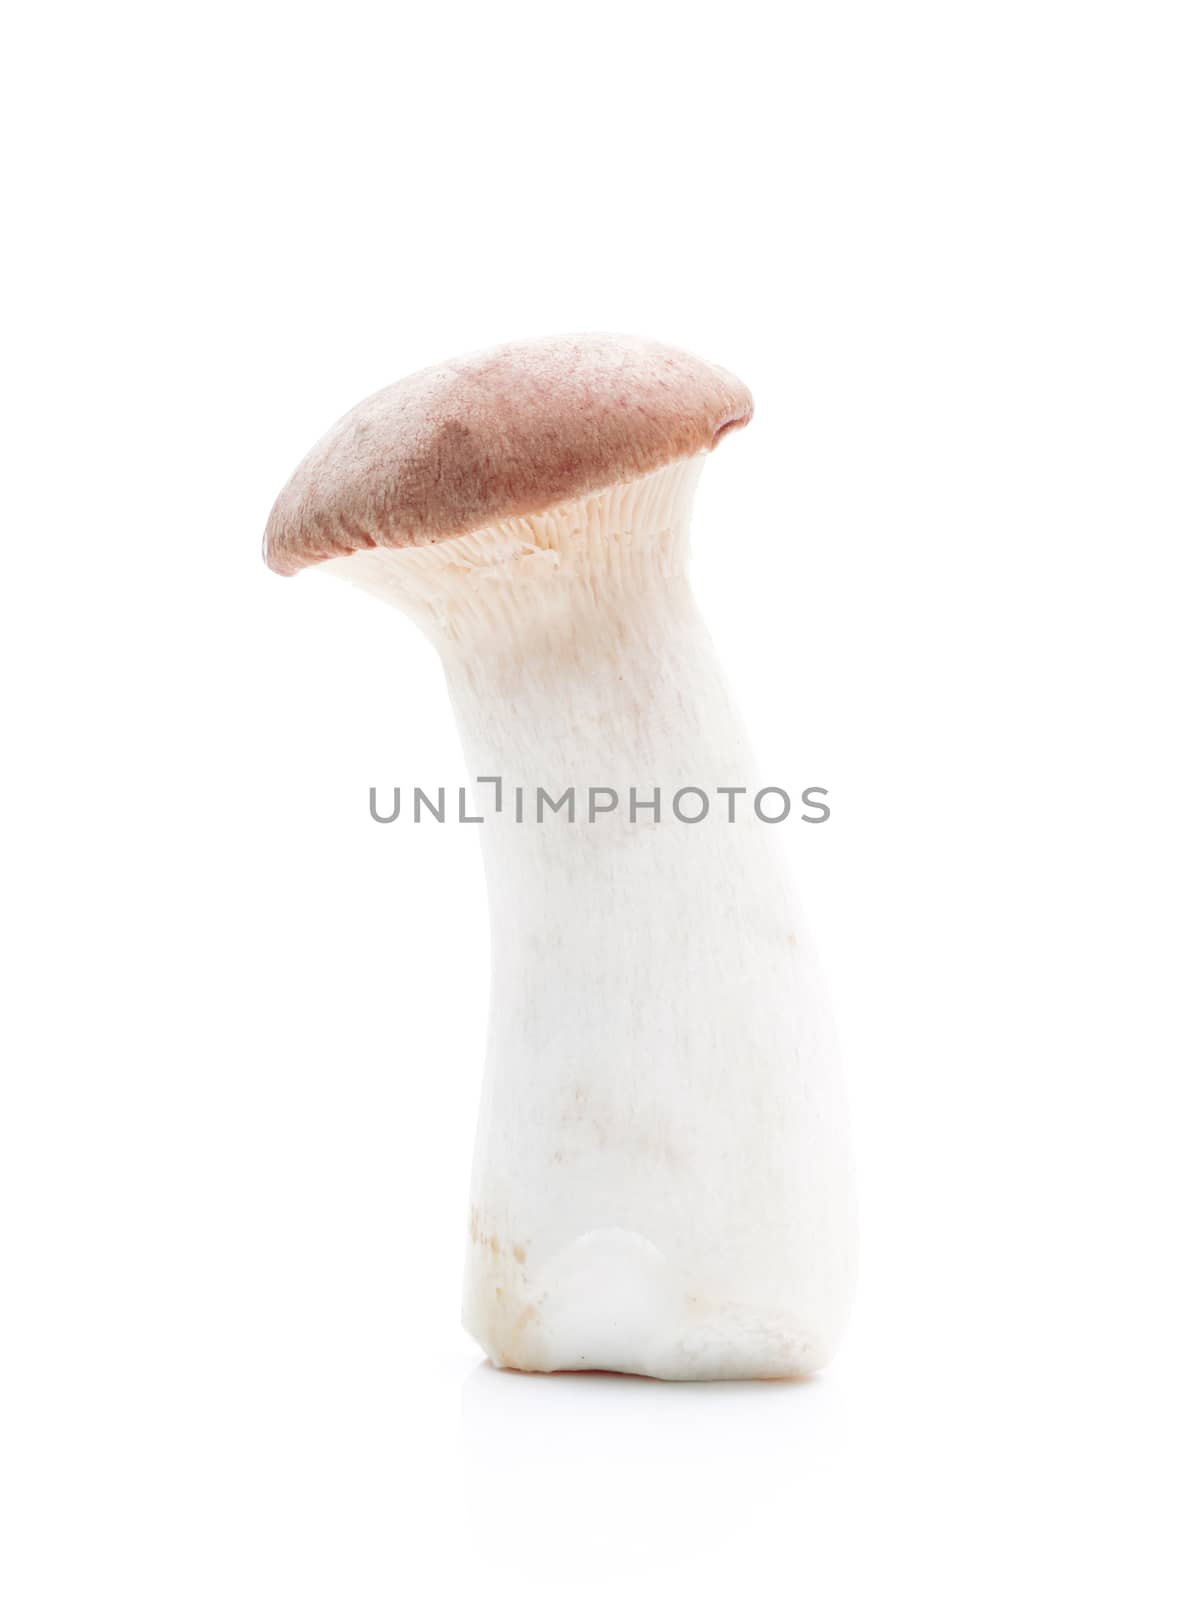 Mushroom on a white background by sompongtom